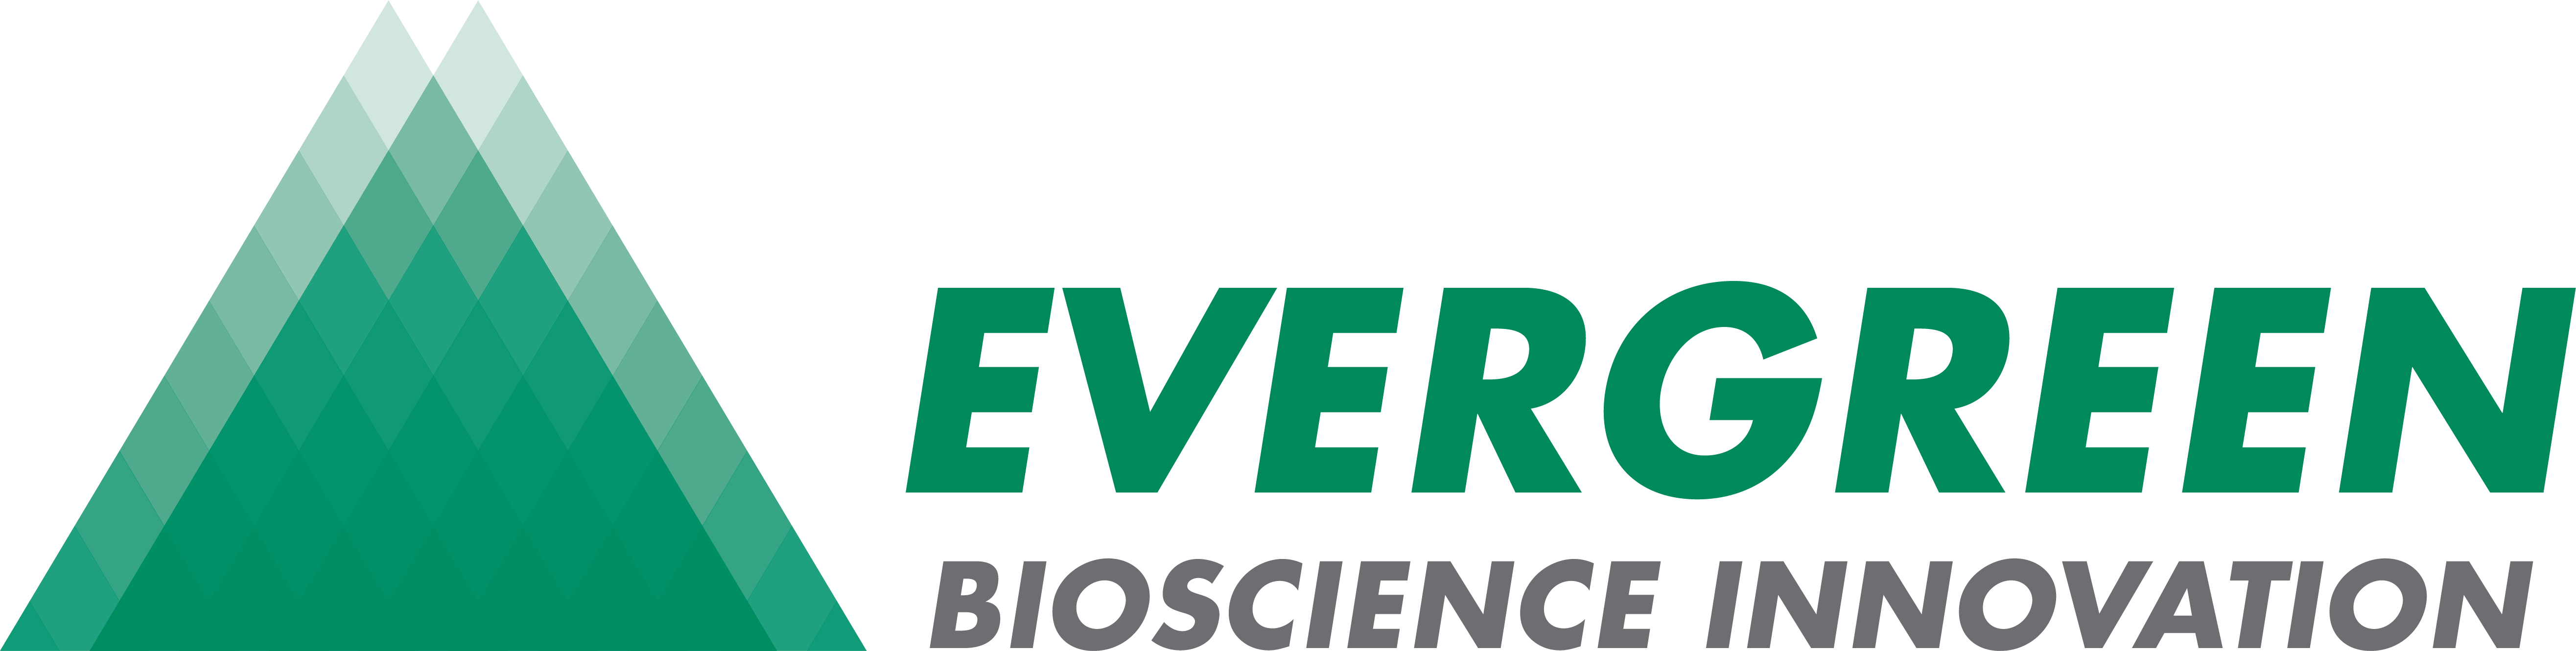 Evergreen Bioscience Innovation